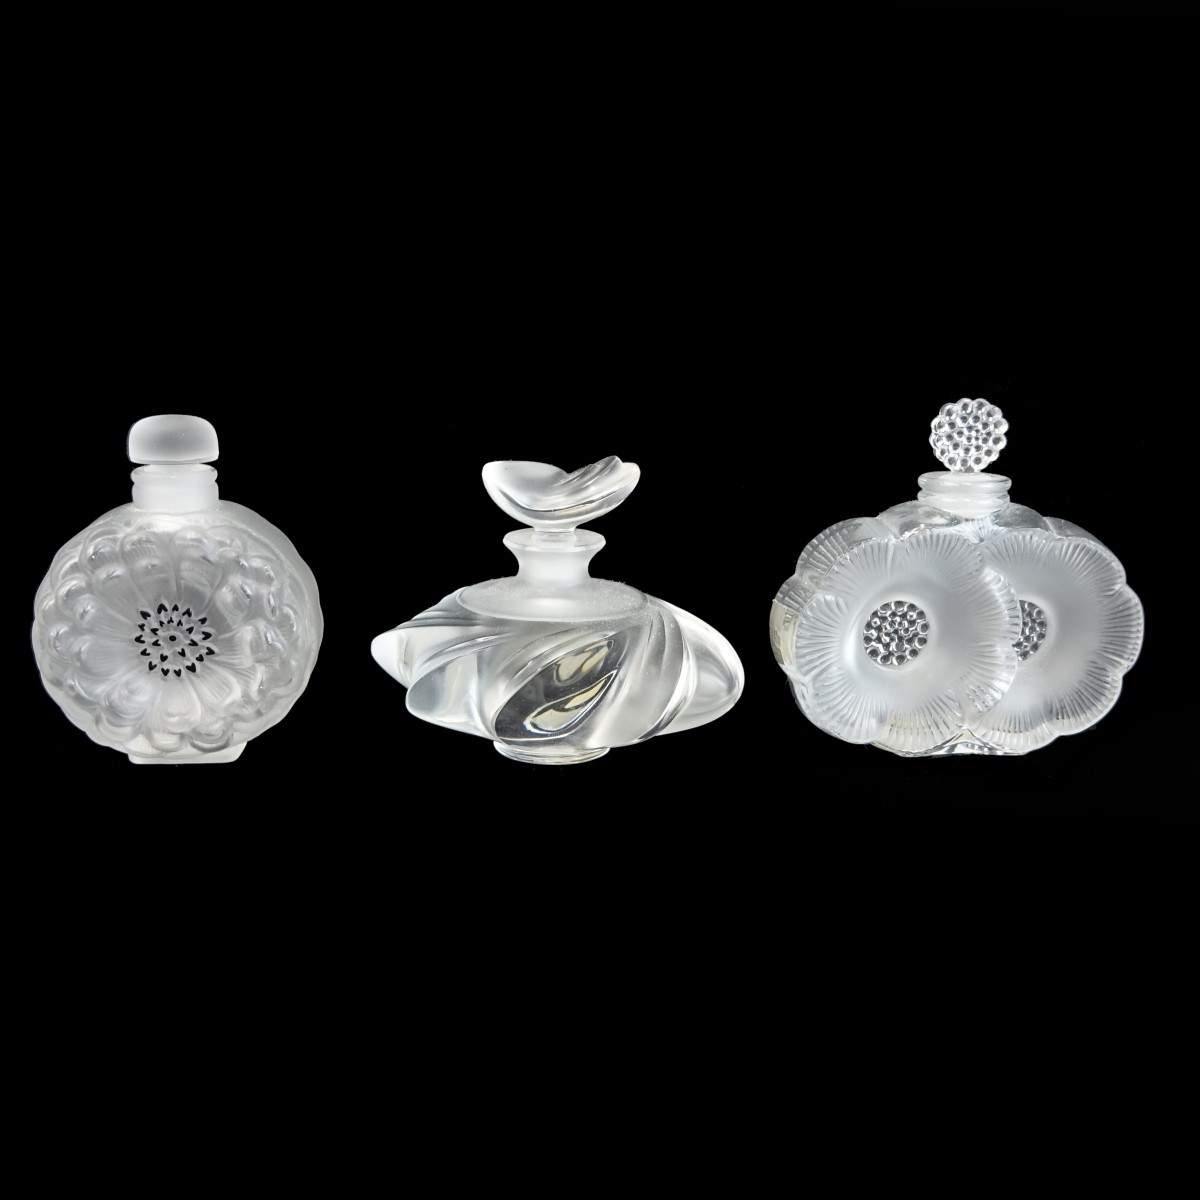 Three Lalique Crystal Perfume Bottles